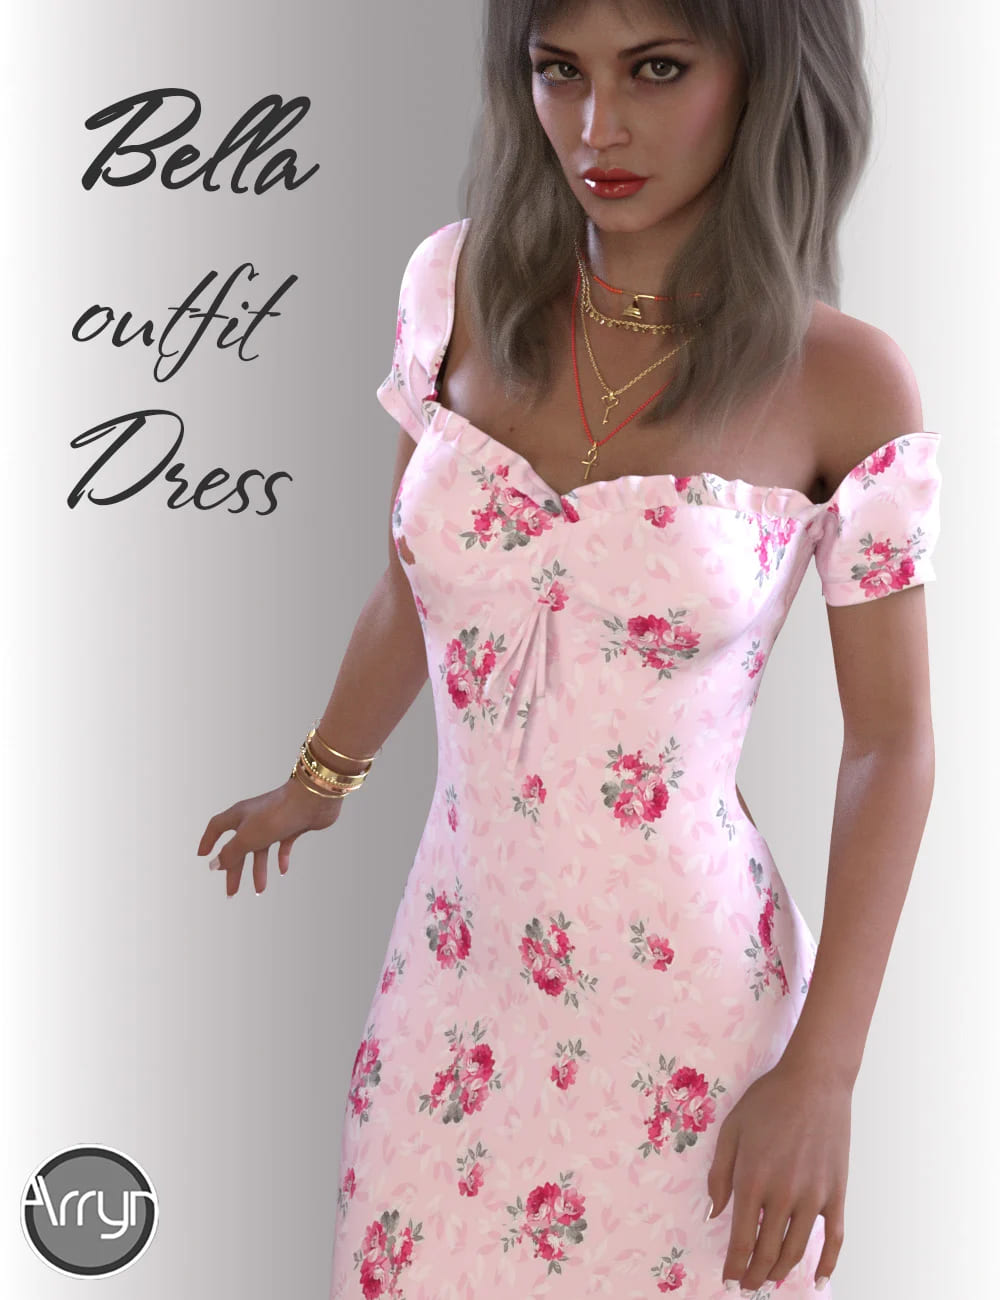 dForce Bella Dress Outfit for Genesis 8.1 Females_DAZ3DDL